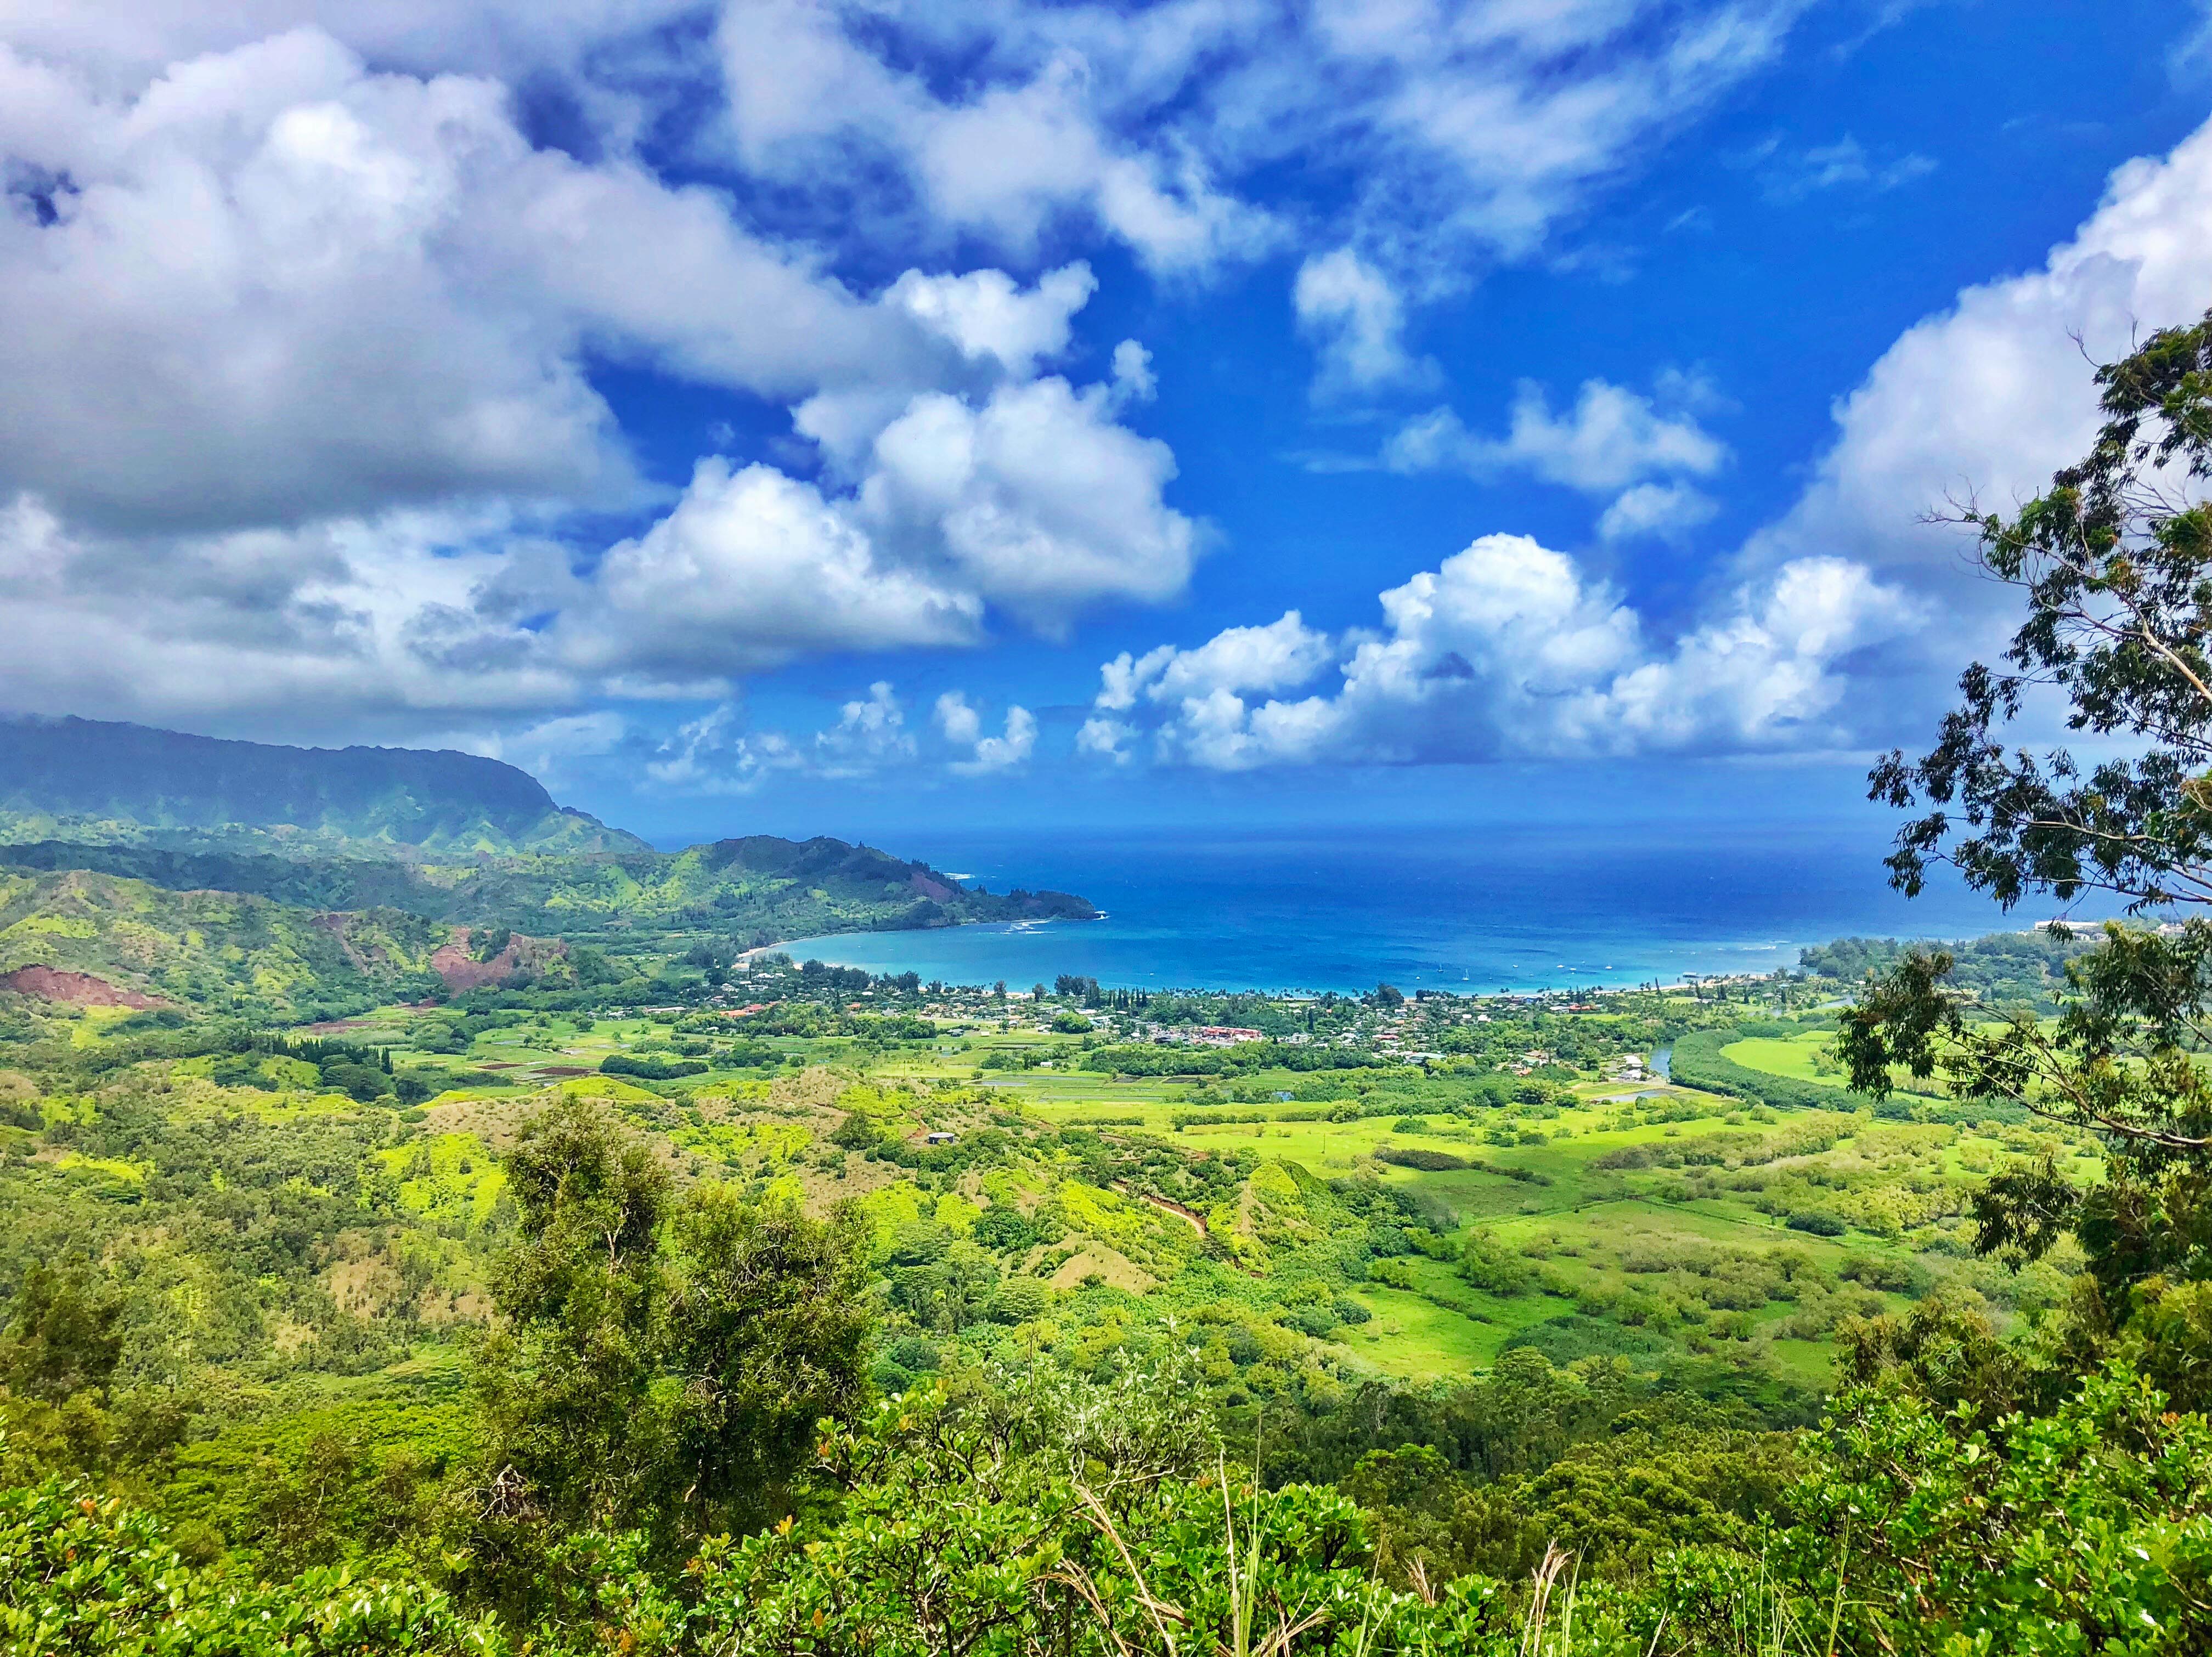 The view from Kauai's Okolehao Trail at 1.5 miles up